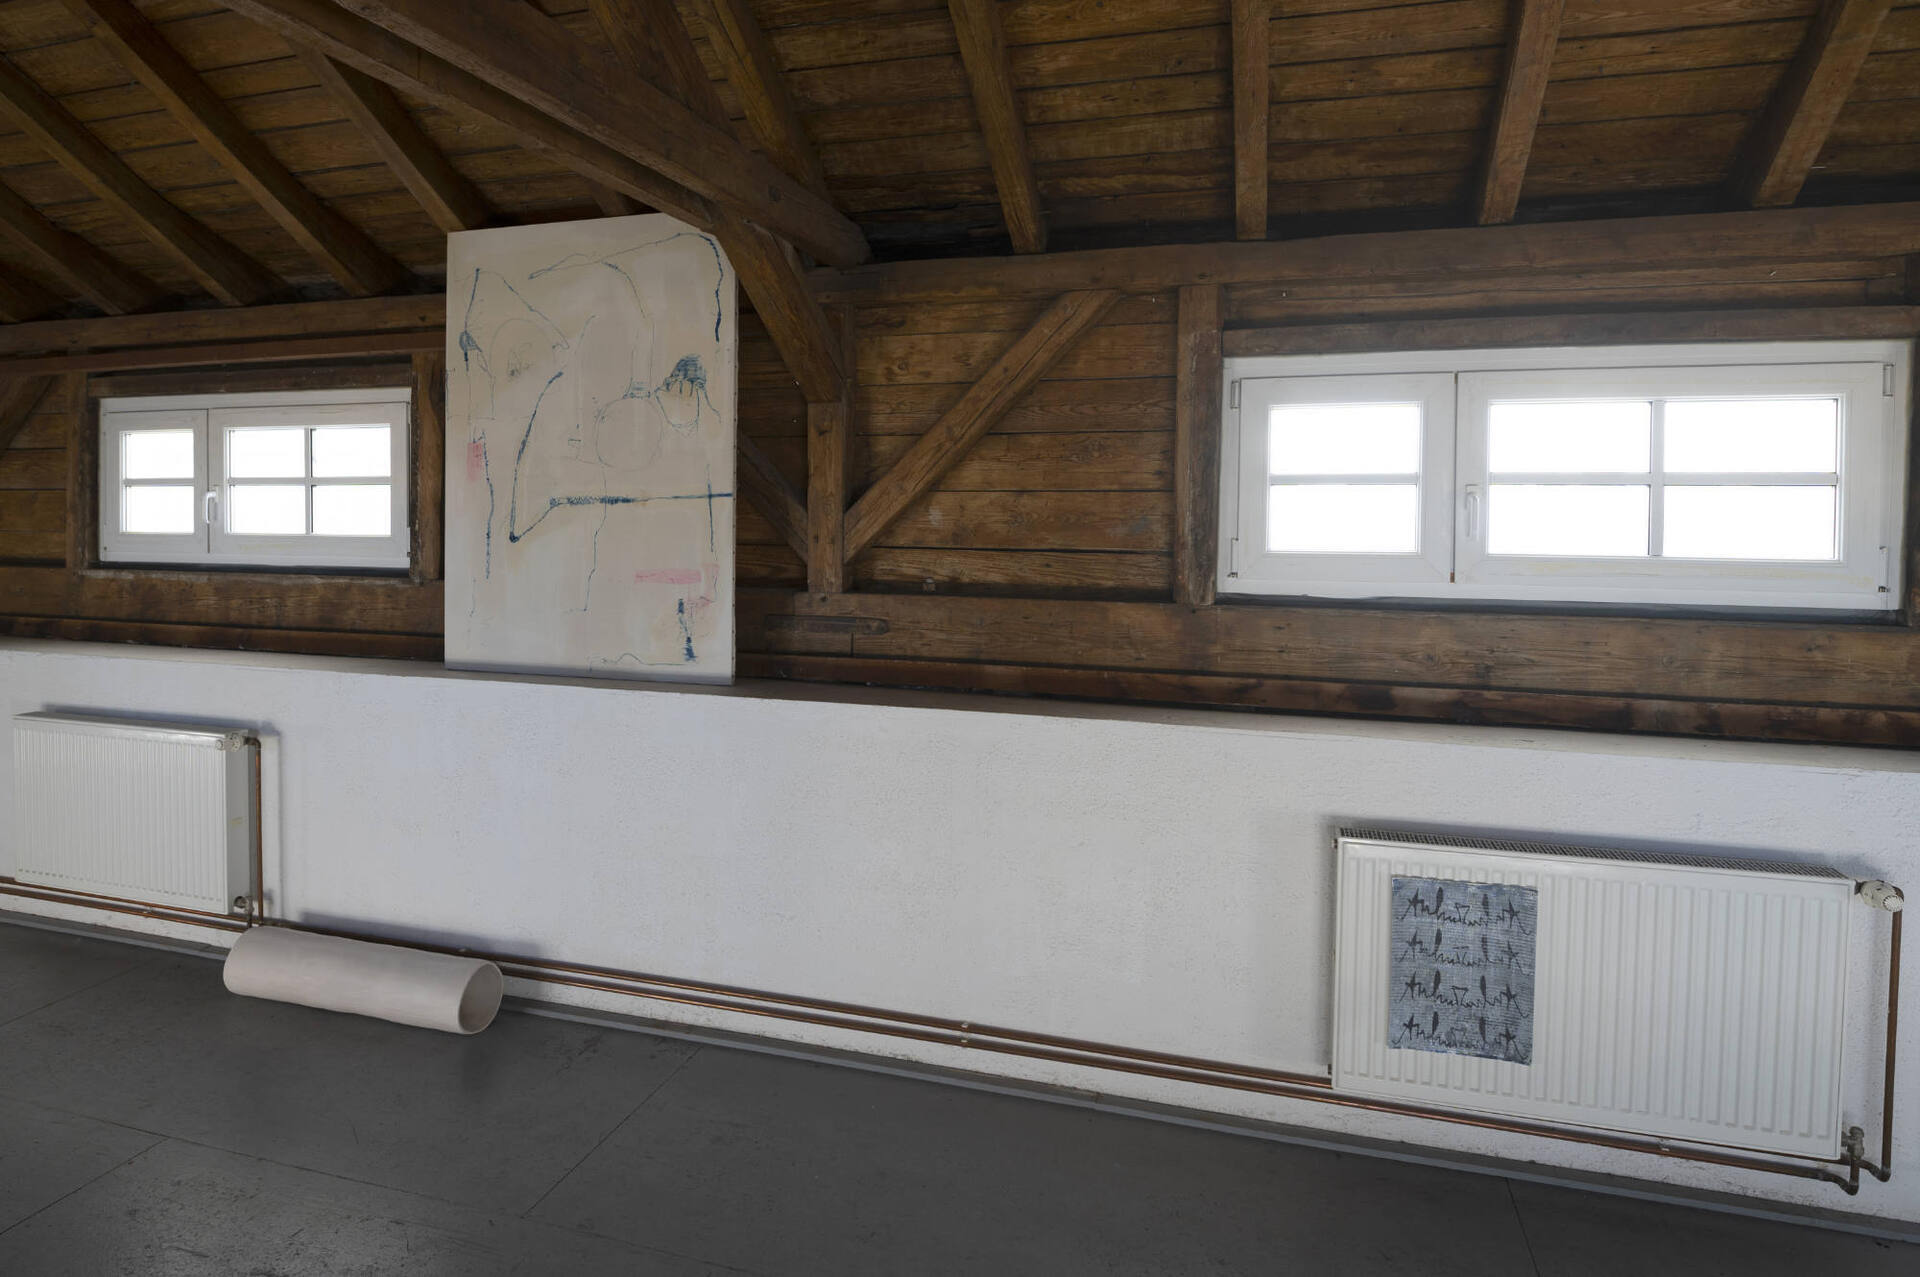 Exhibition View with works by Katerina Matsagkos, Philipp Naujoks, Arthur Löwen